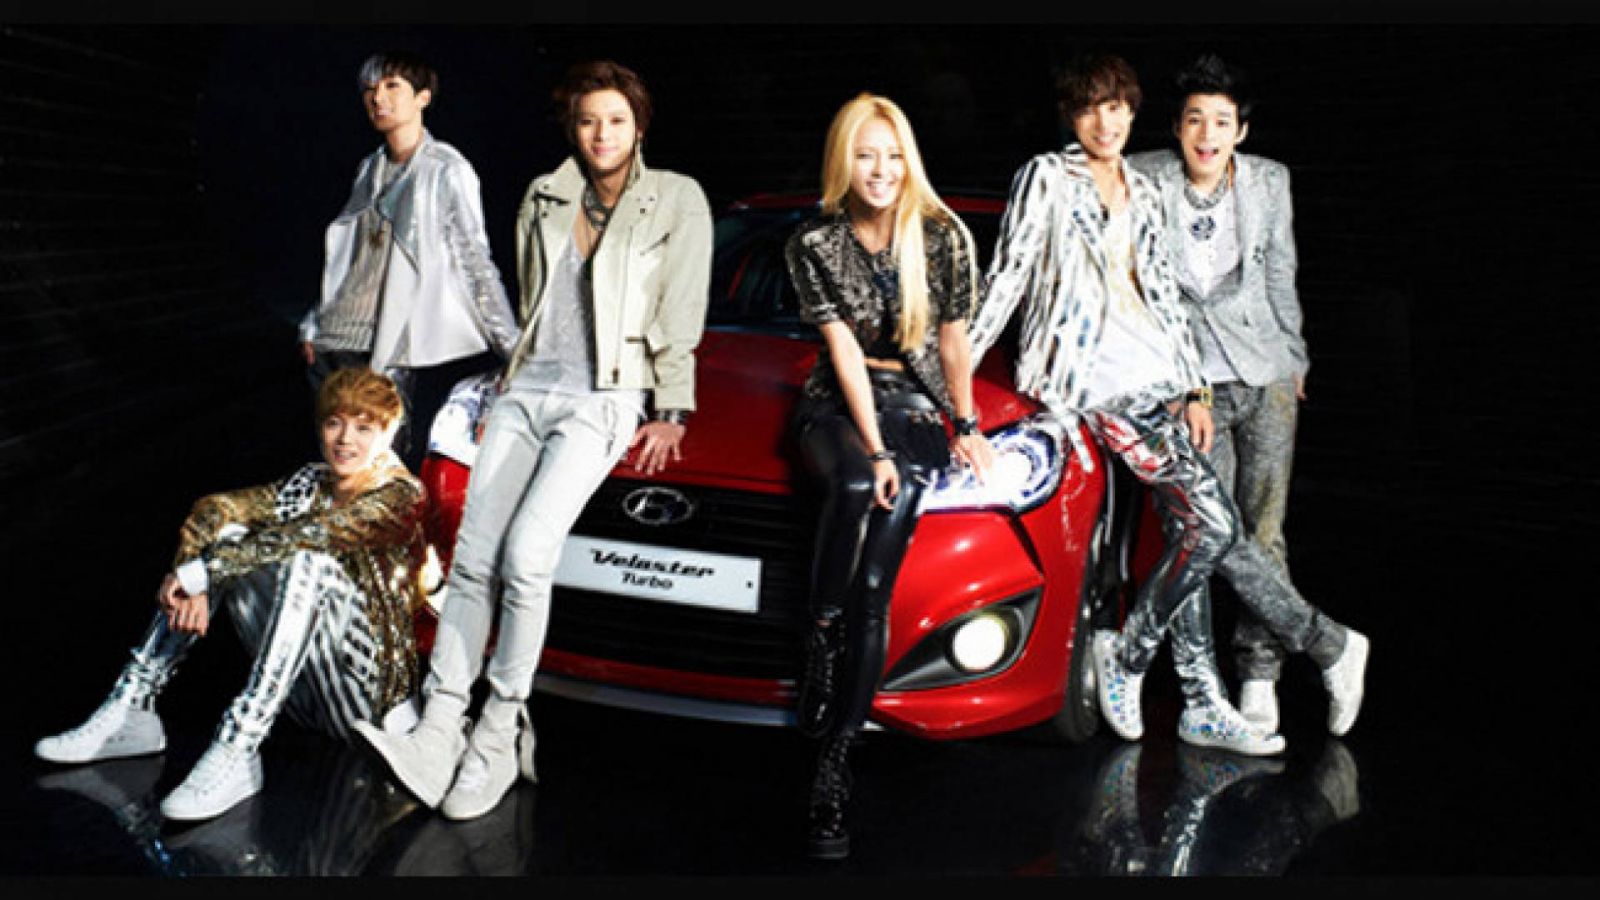 SM's Younique Unit © SM Entertainment/Hyundai Motor Company